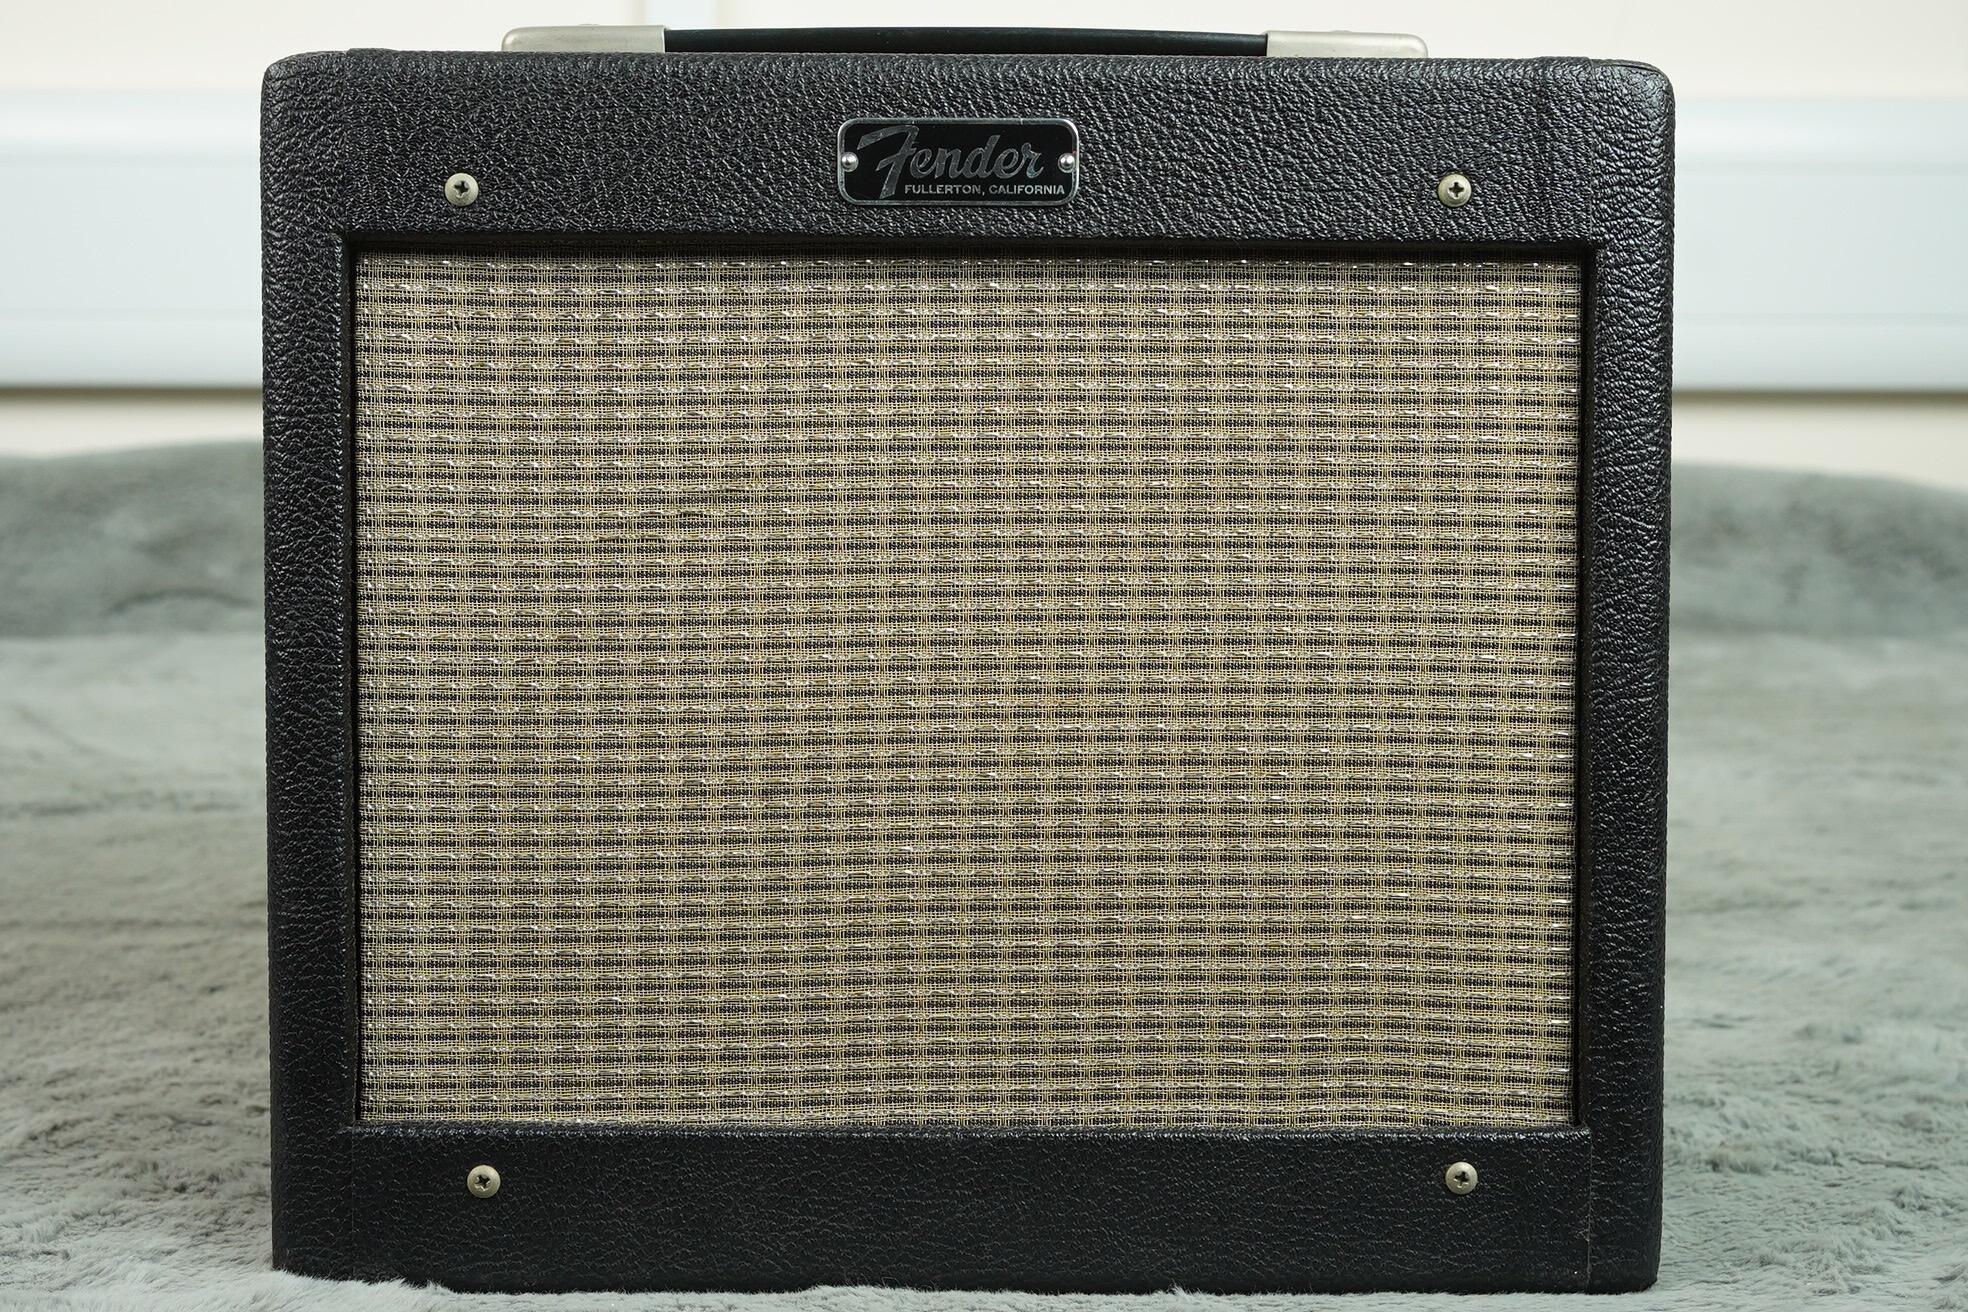 1964 Fender Black Tweed Champ 5F1